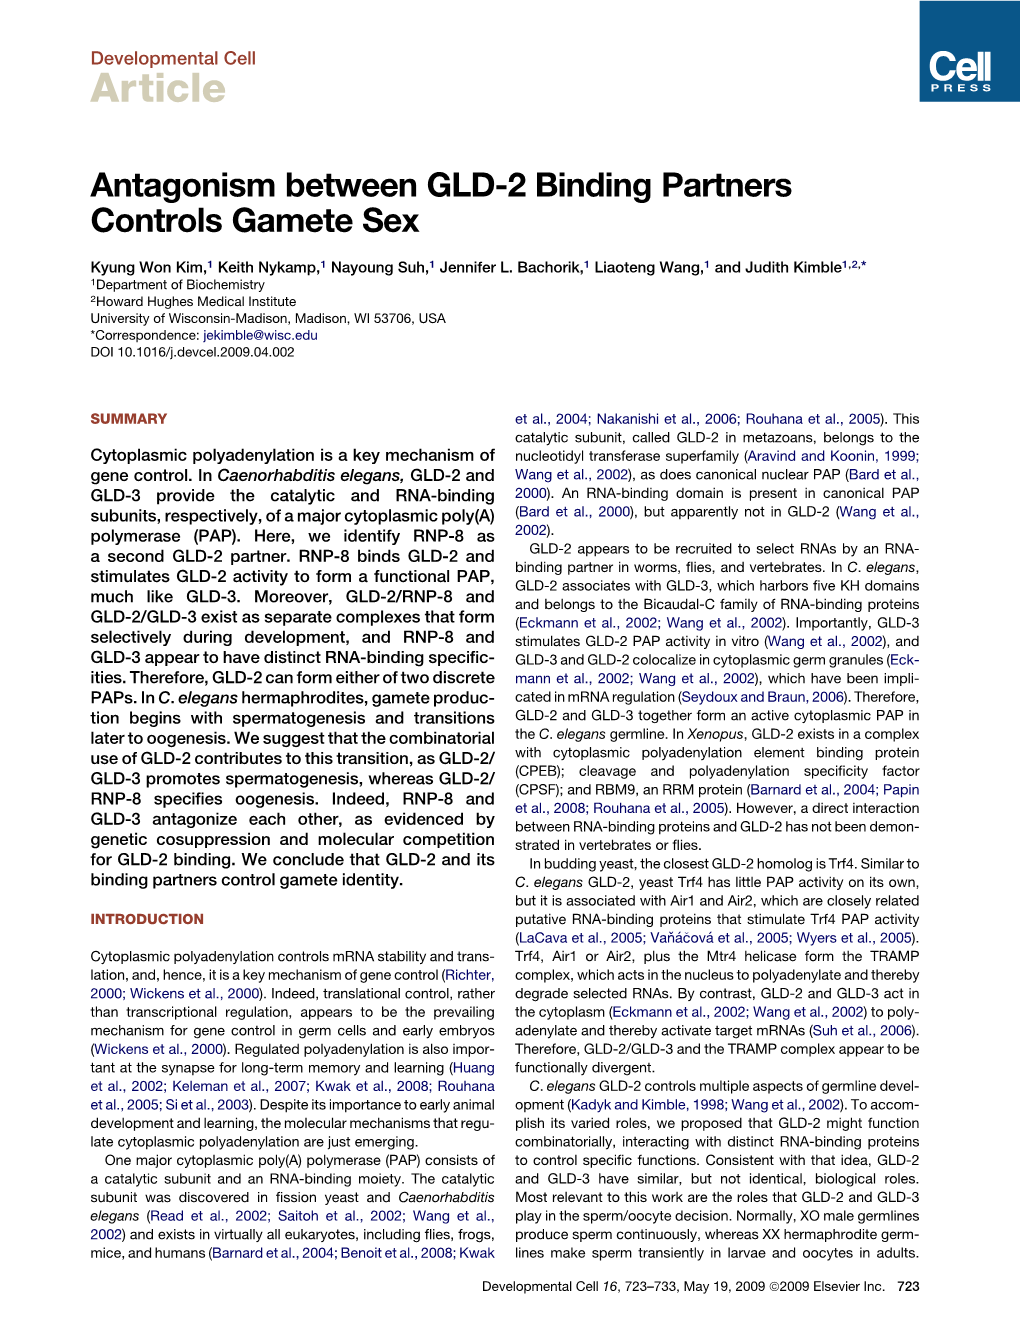 Antagonism Between GLD-2 Binding Partners Controls Gamete Sex